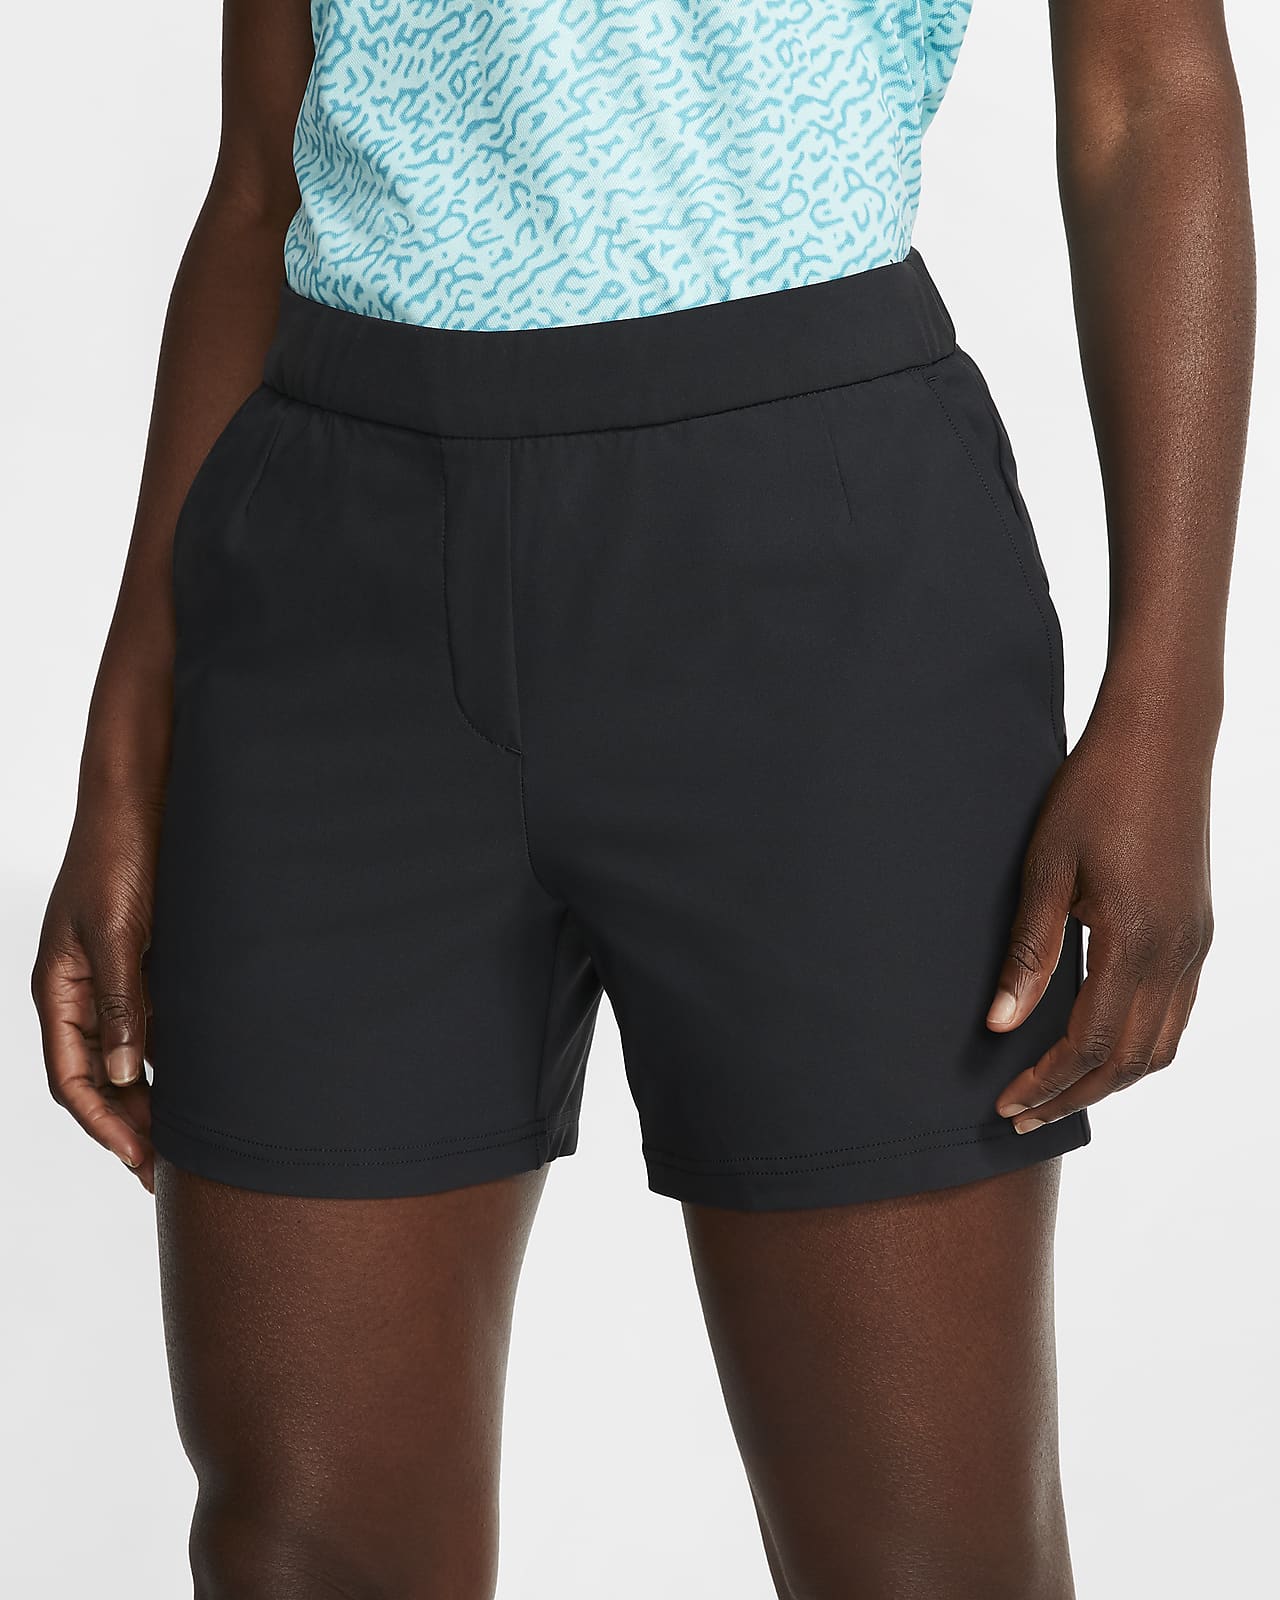 nike golf shorts women's plus size